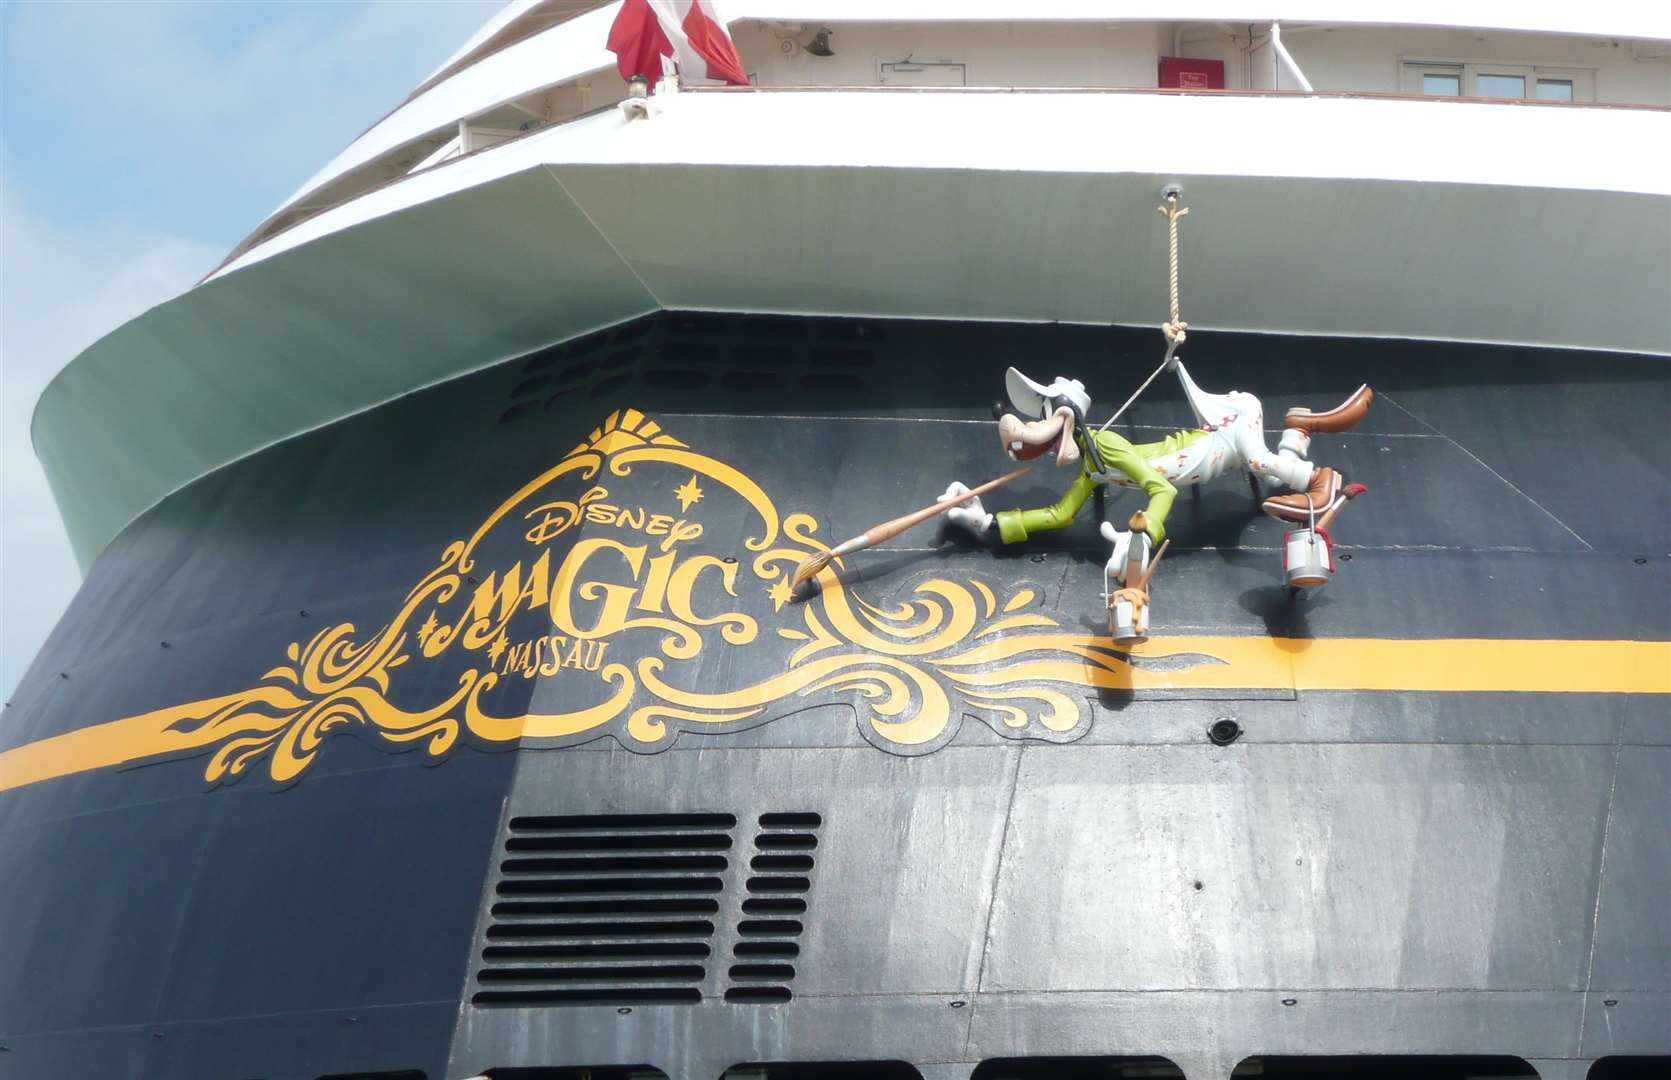 Goofy with the Disney Magic cruise ship